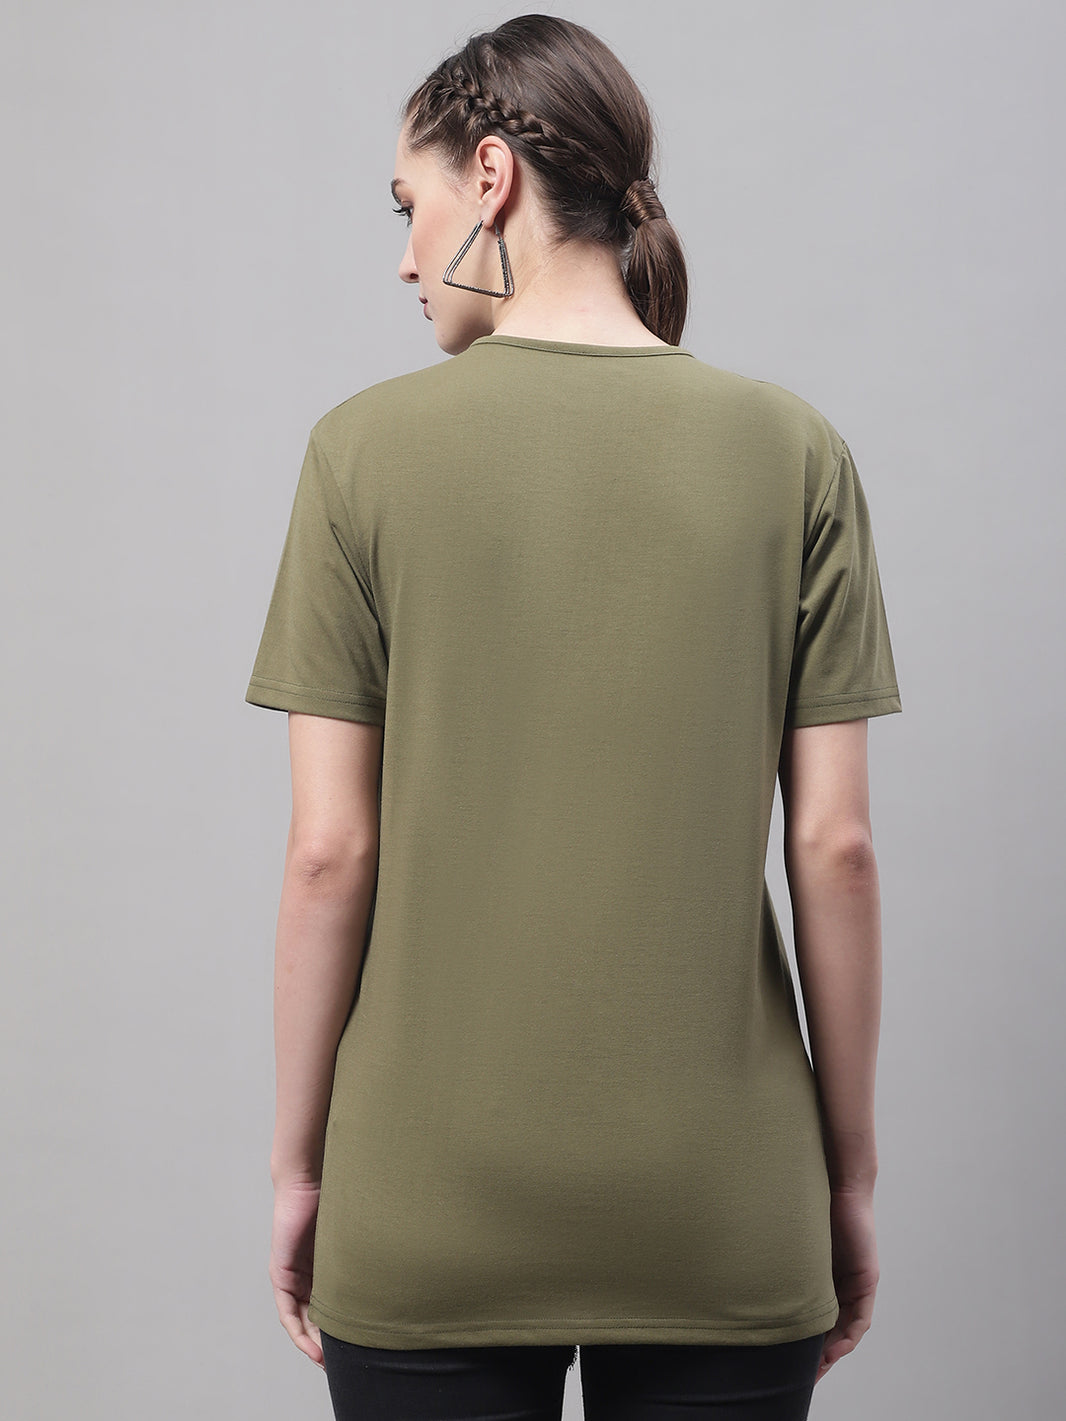 Vimal Jonney Round Neck Cotton Printed Olive T-Shirt for Women